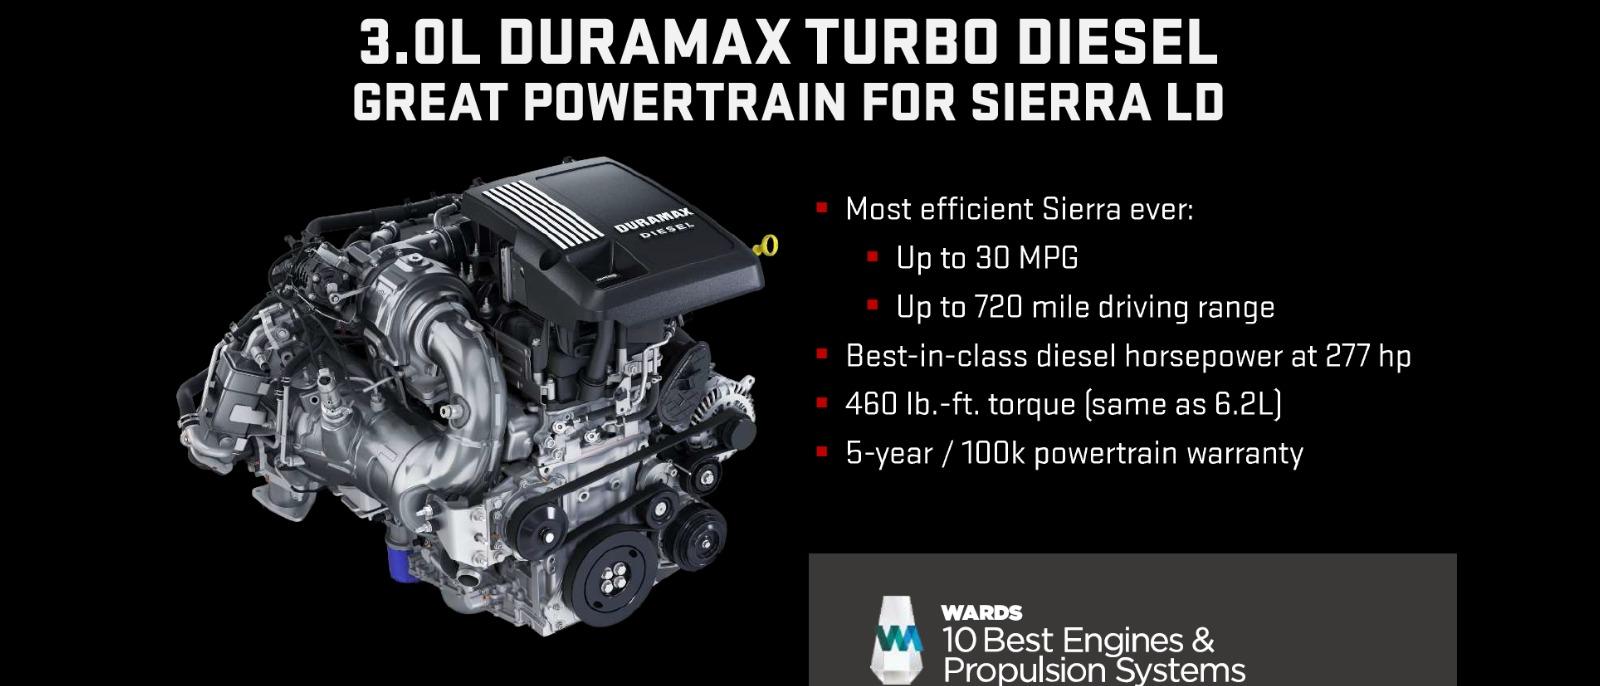 3.0L Duramax Turbo Diesel engine